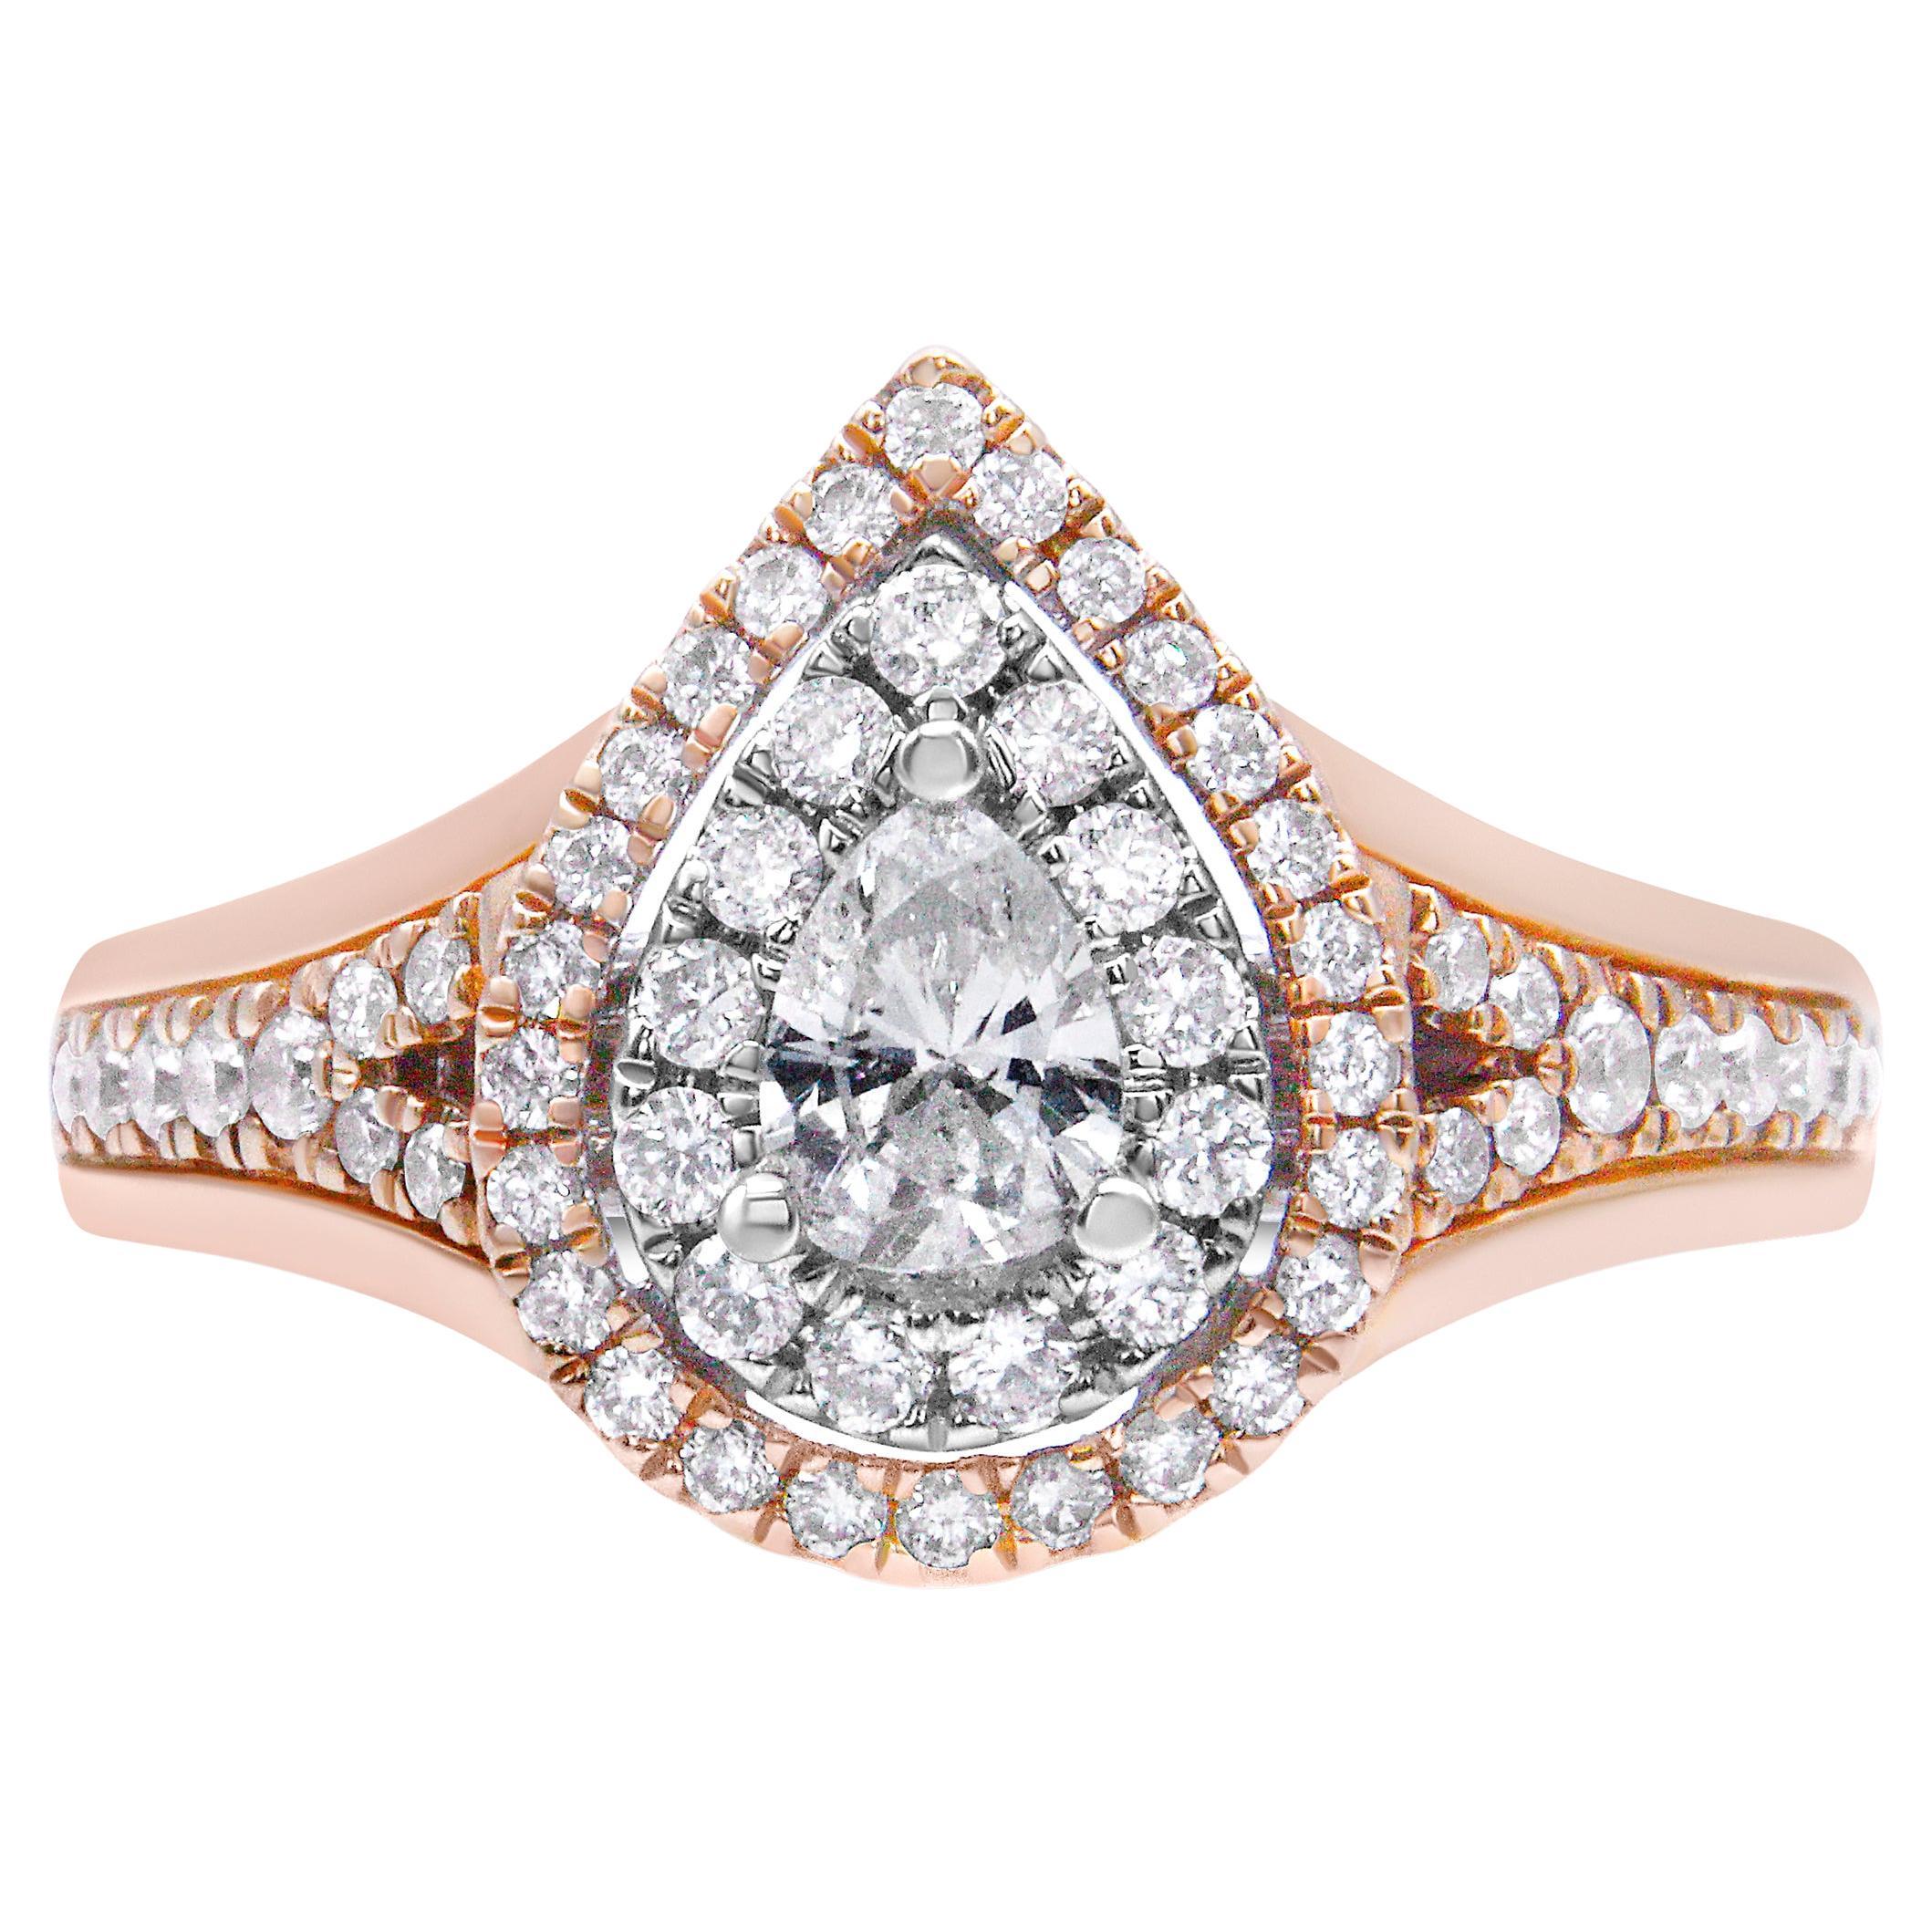 14K White & Rose Gold 1.0 Carat Diamond Pear Shaped Double Halo Engagement Ring